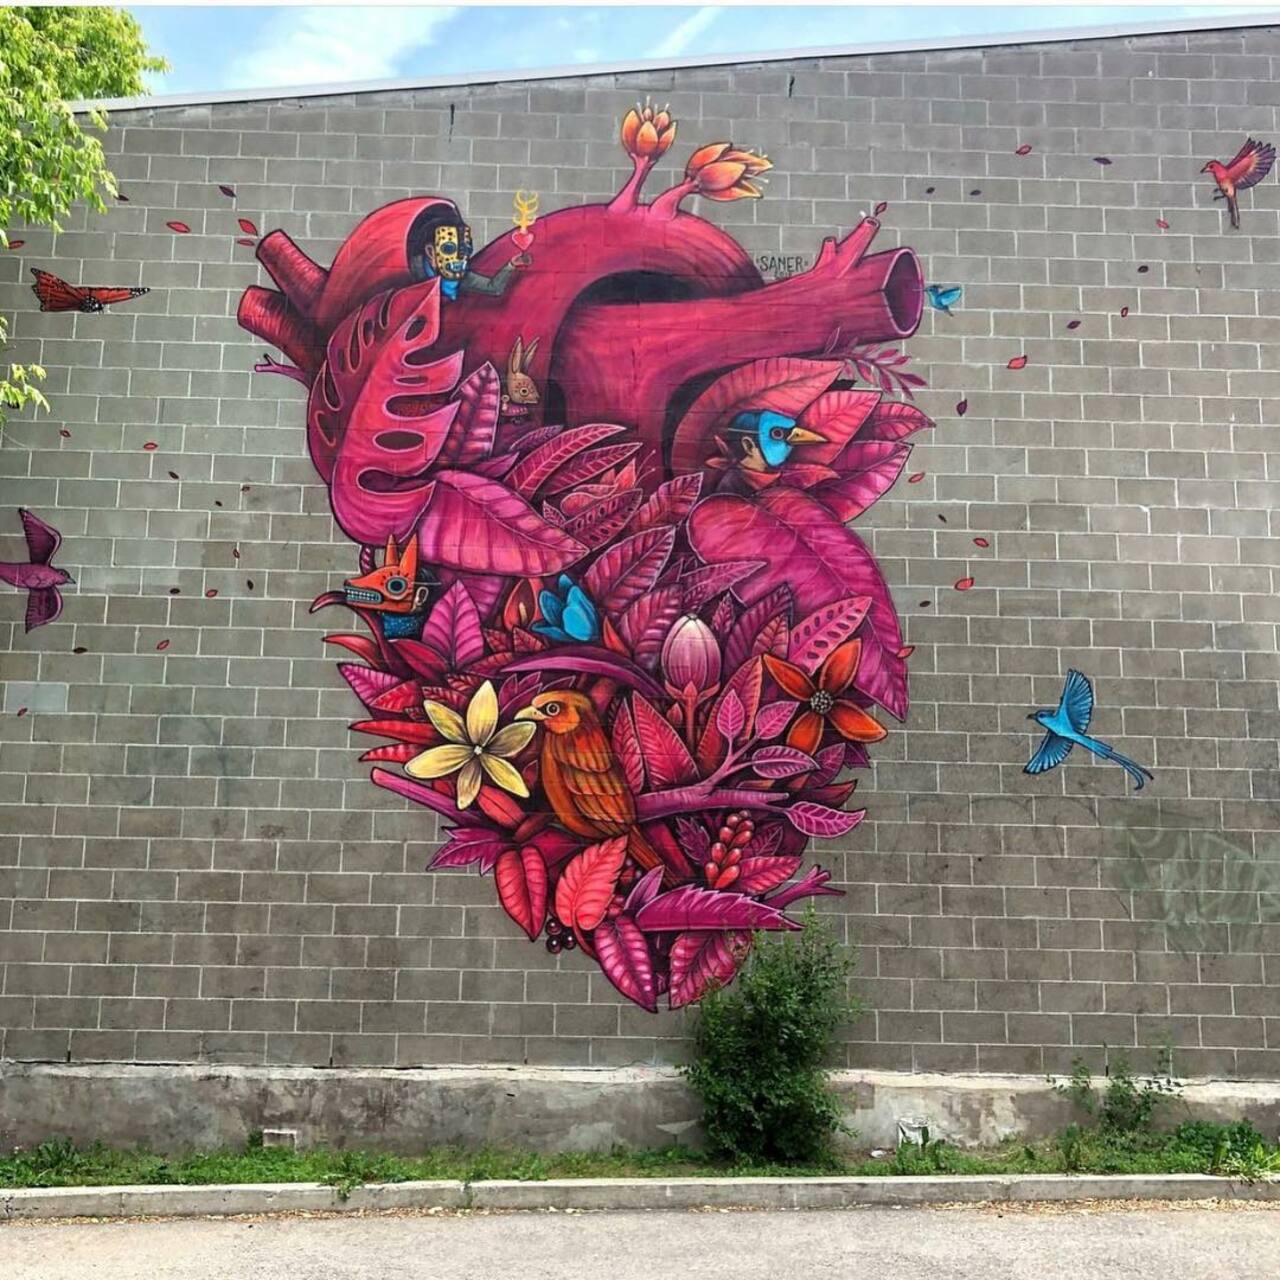 Amazing Wall Art by Saner_Edgar in Montreal, Canada 🇨🇦(2018) • • • #art #artists #artlovers #streetart #graffiti #muralart #wallart #urbanart #saneredgar #streetartofficial #contemporaryart #Montreal #canada #artistsnartlovers https://t.co/5Jij9GXbul